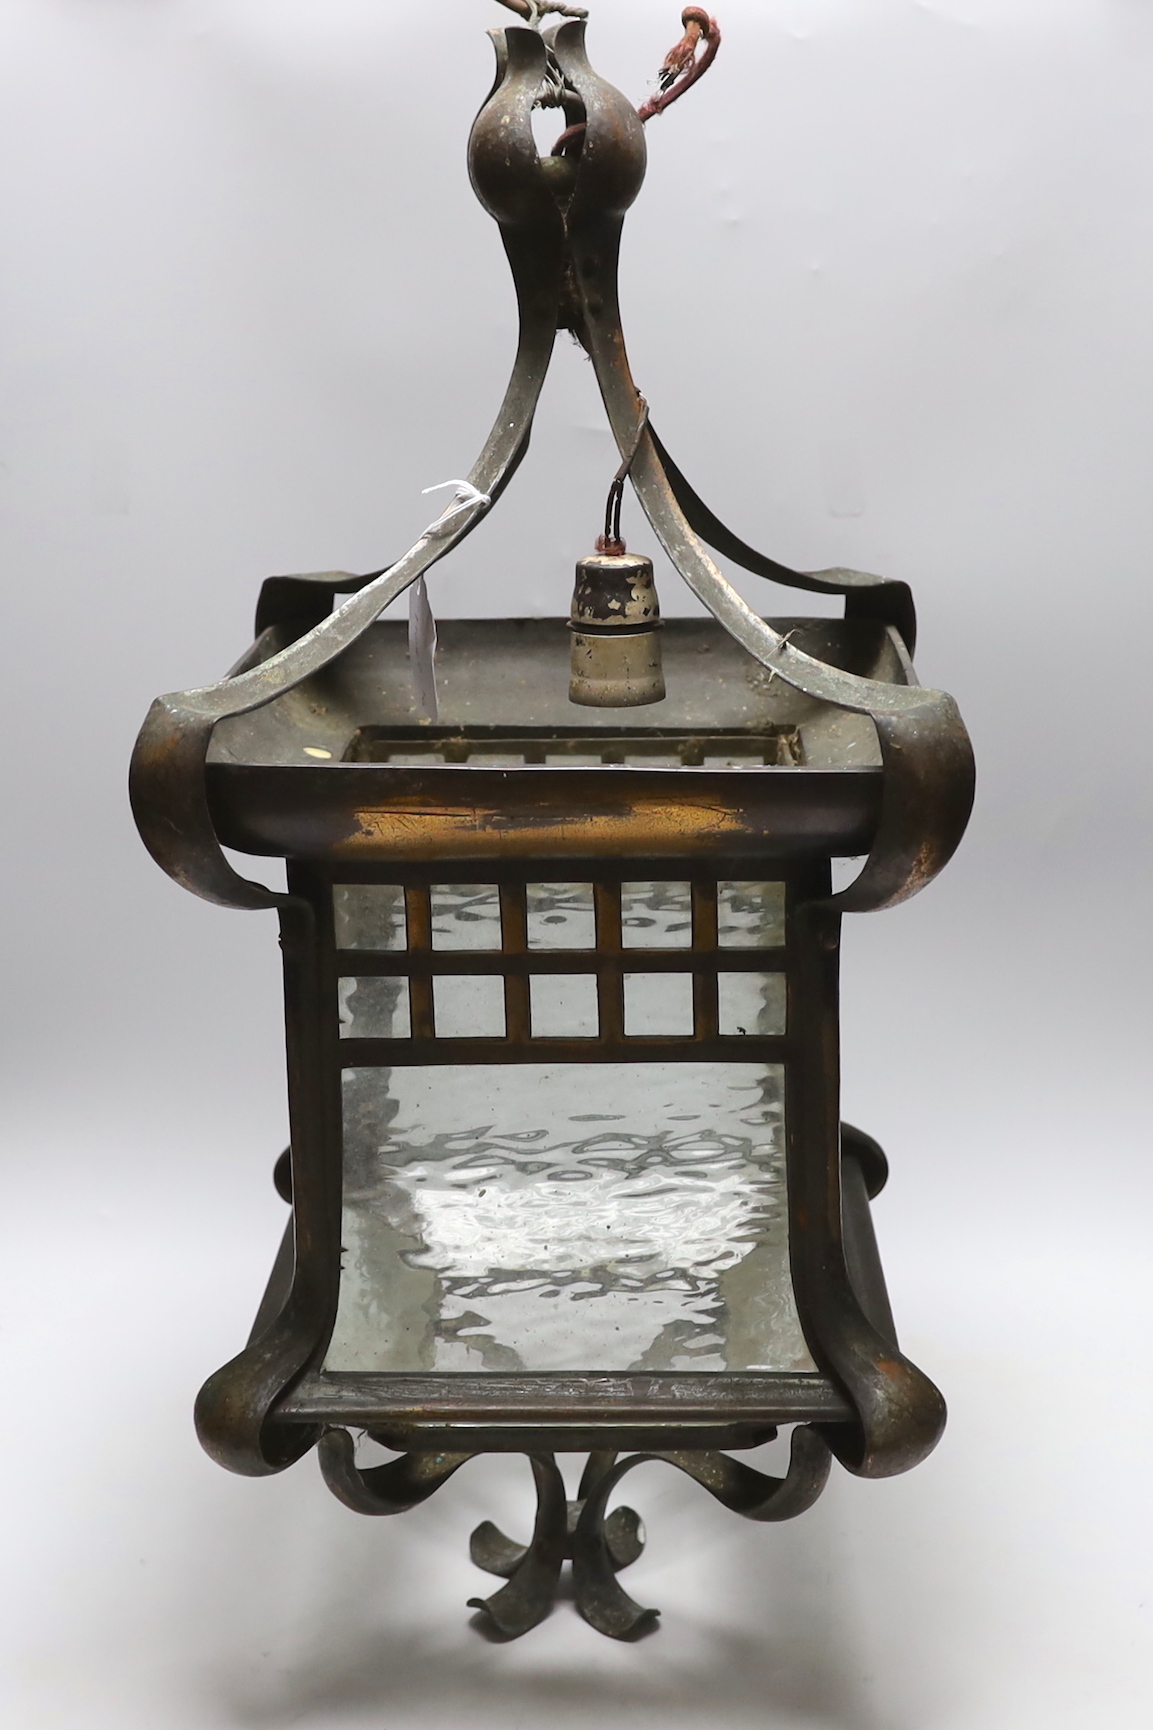 An Art Nouveau copper and glass lantern